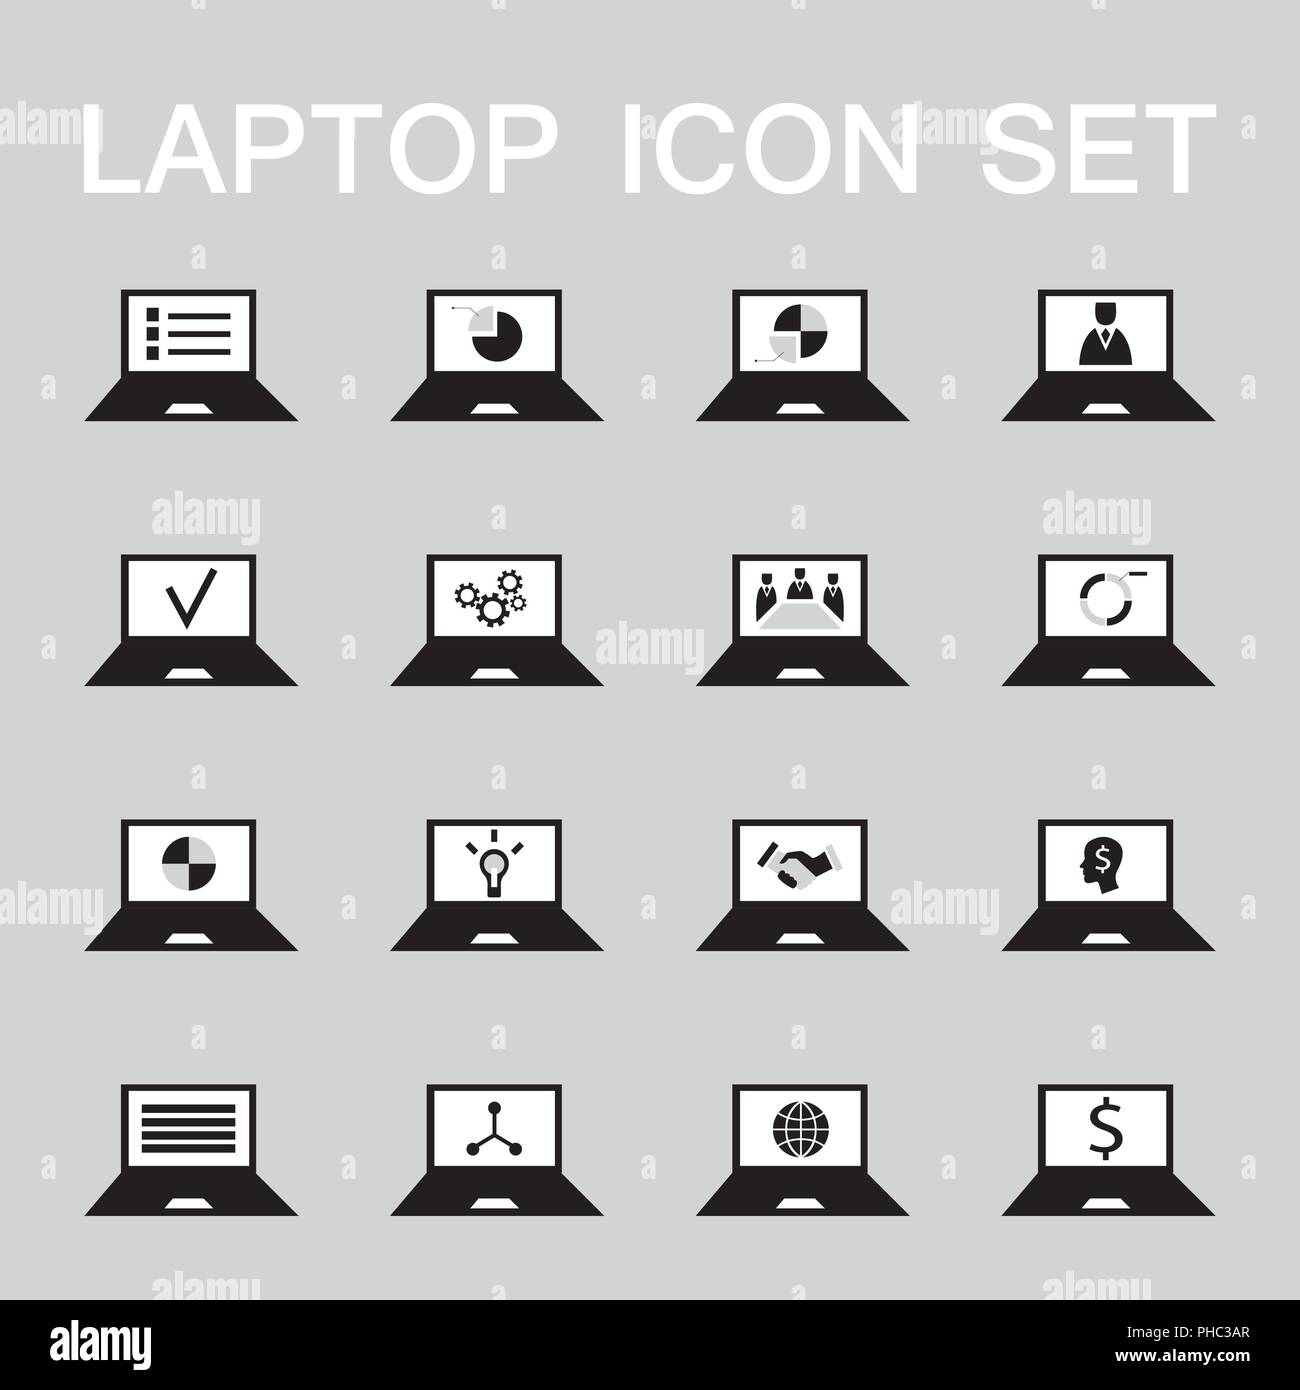 16 Web Icons für Laptop, Computer, Elektronik, Business Theme Stock Vektor